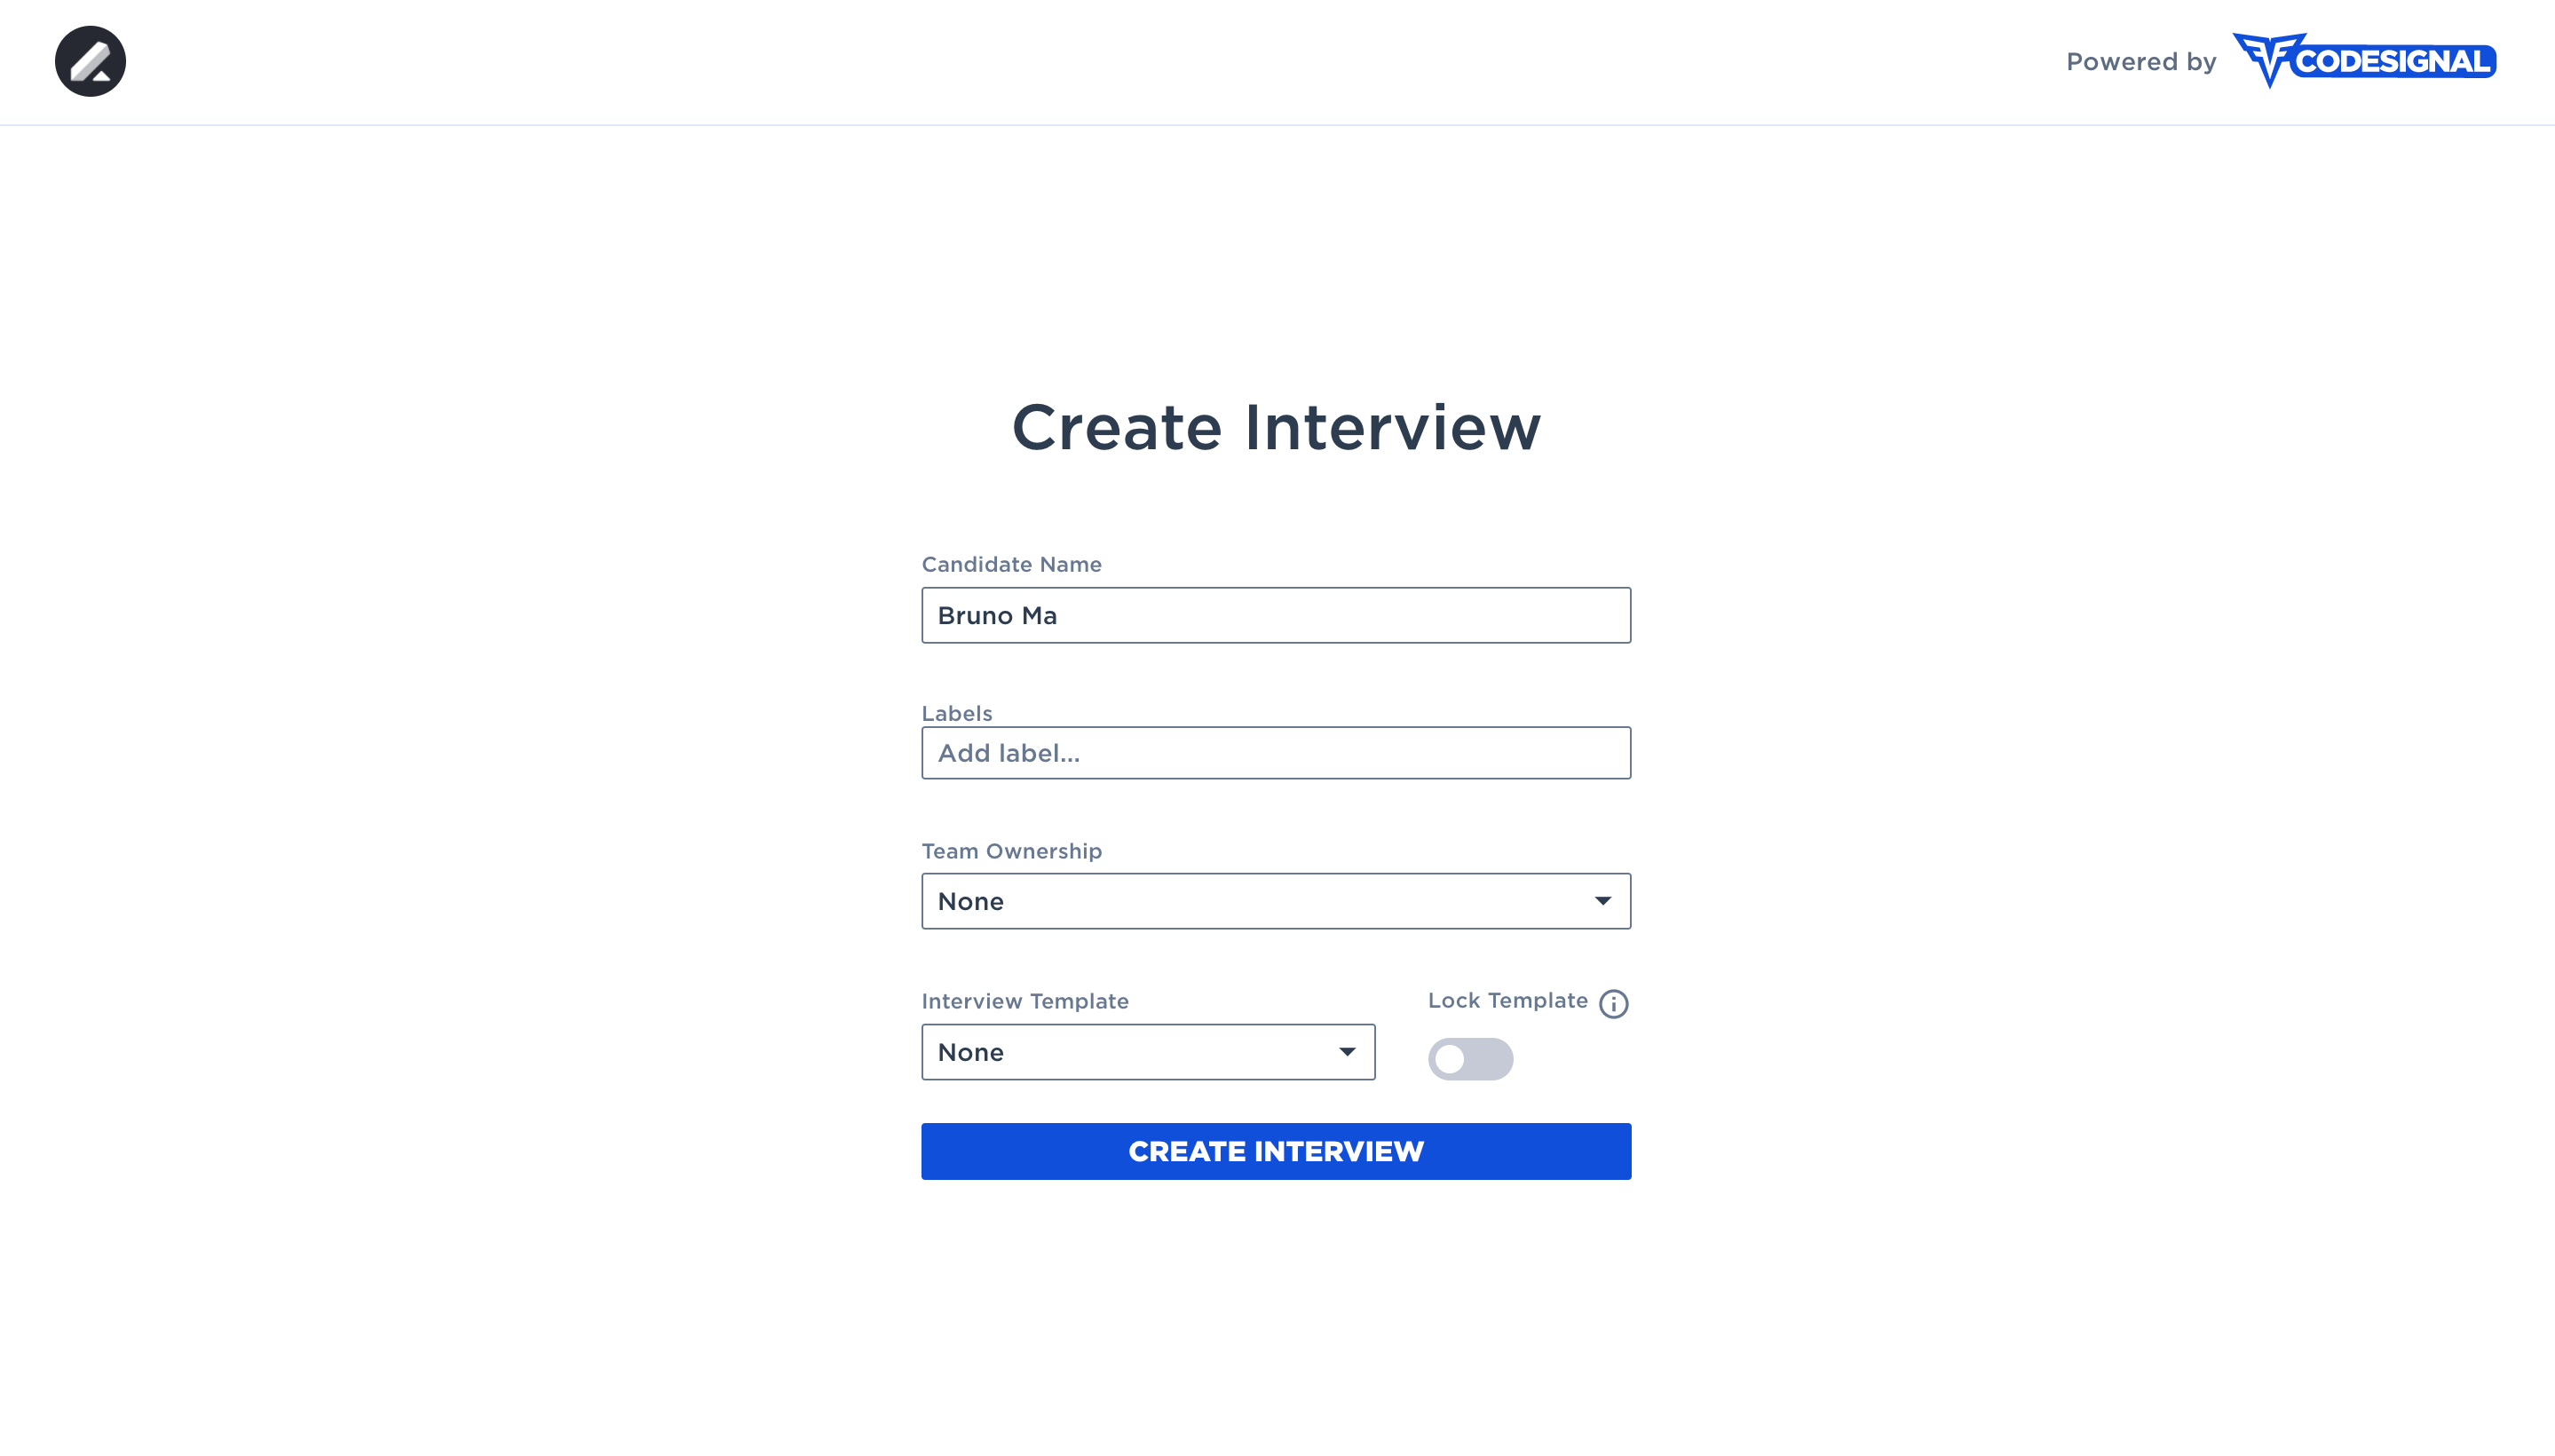 lever_interviewintegration_createinterview.png